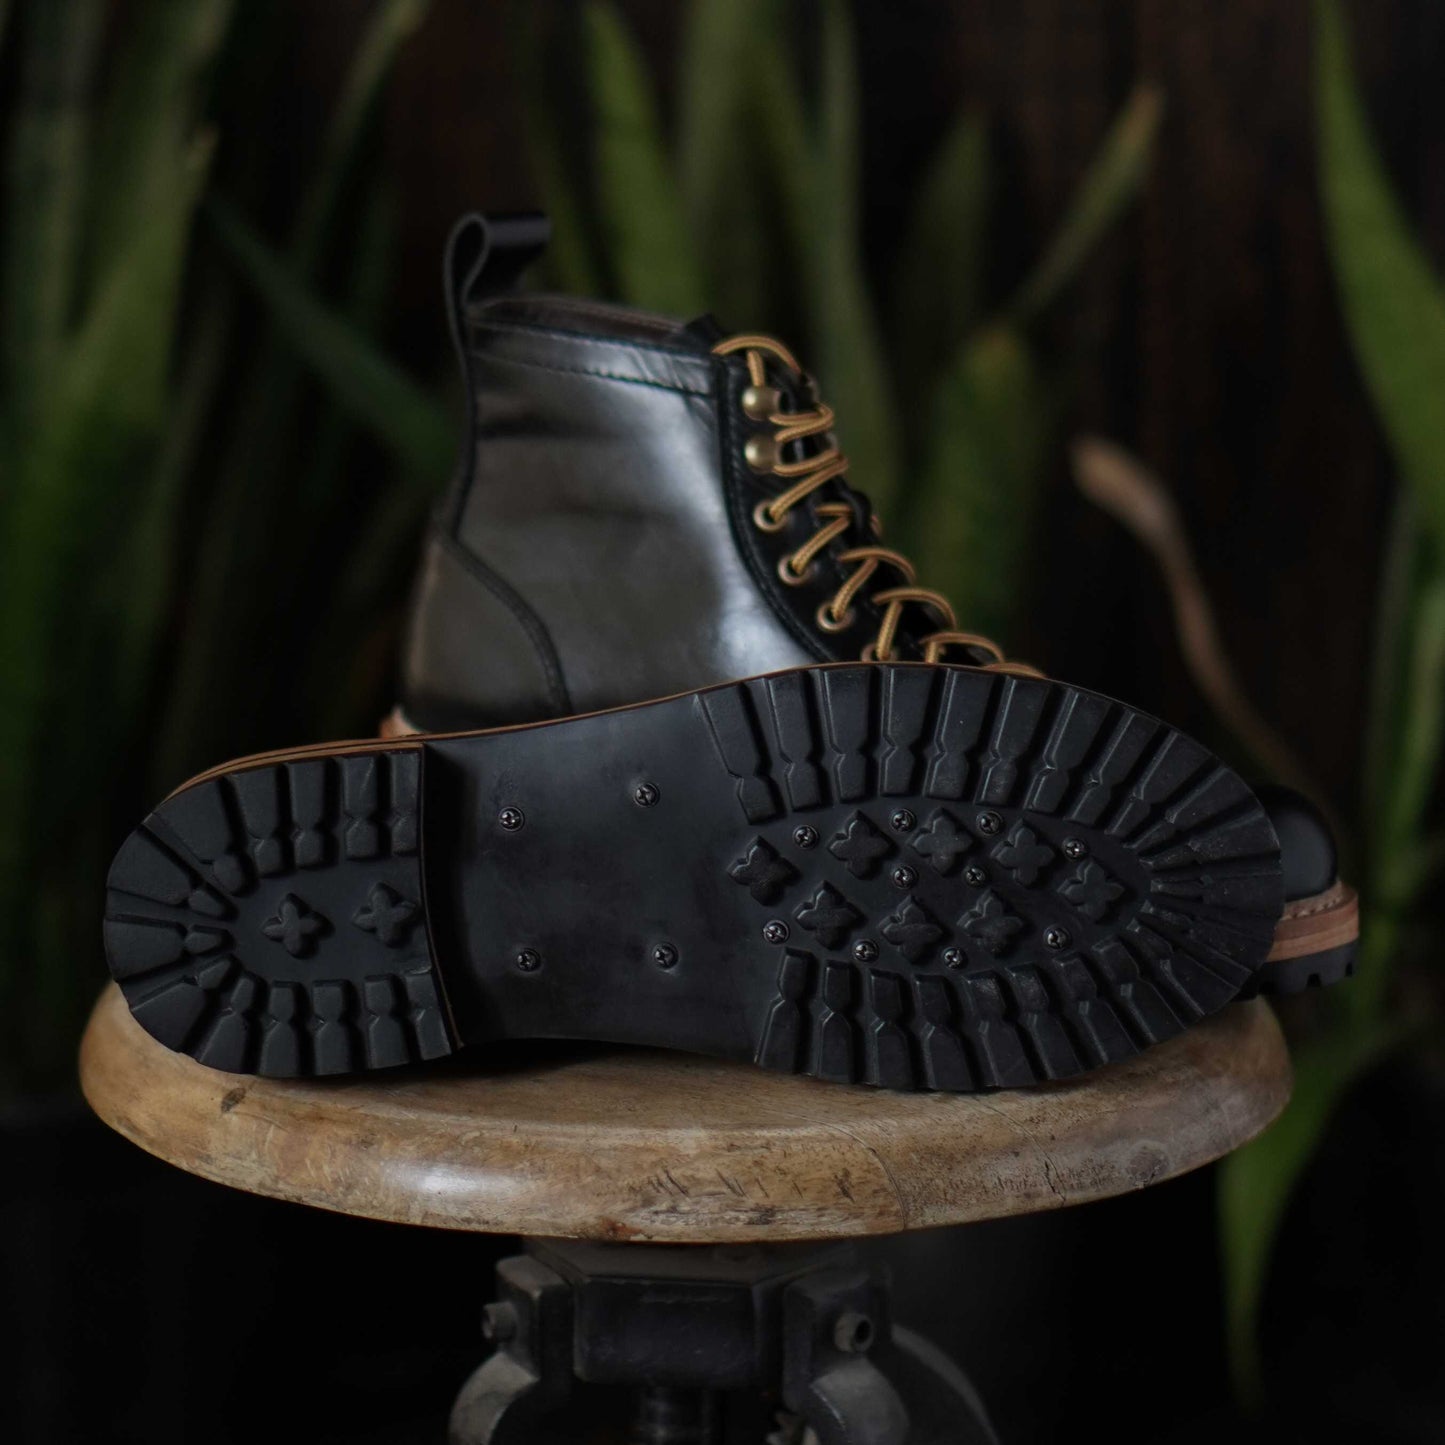 Monkey Explorer Boots (Raven Black) Goodyear Welted